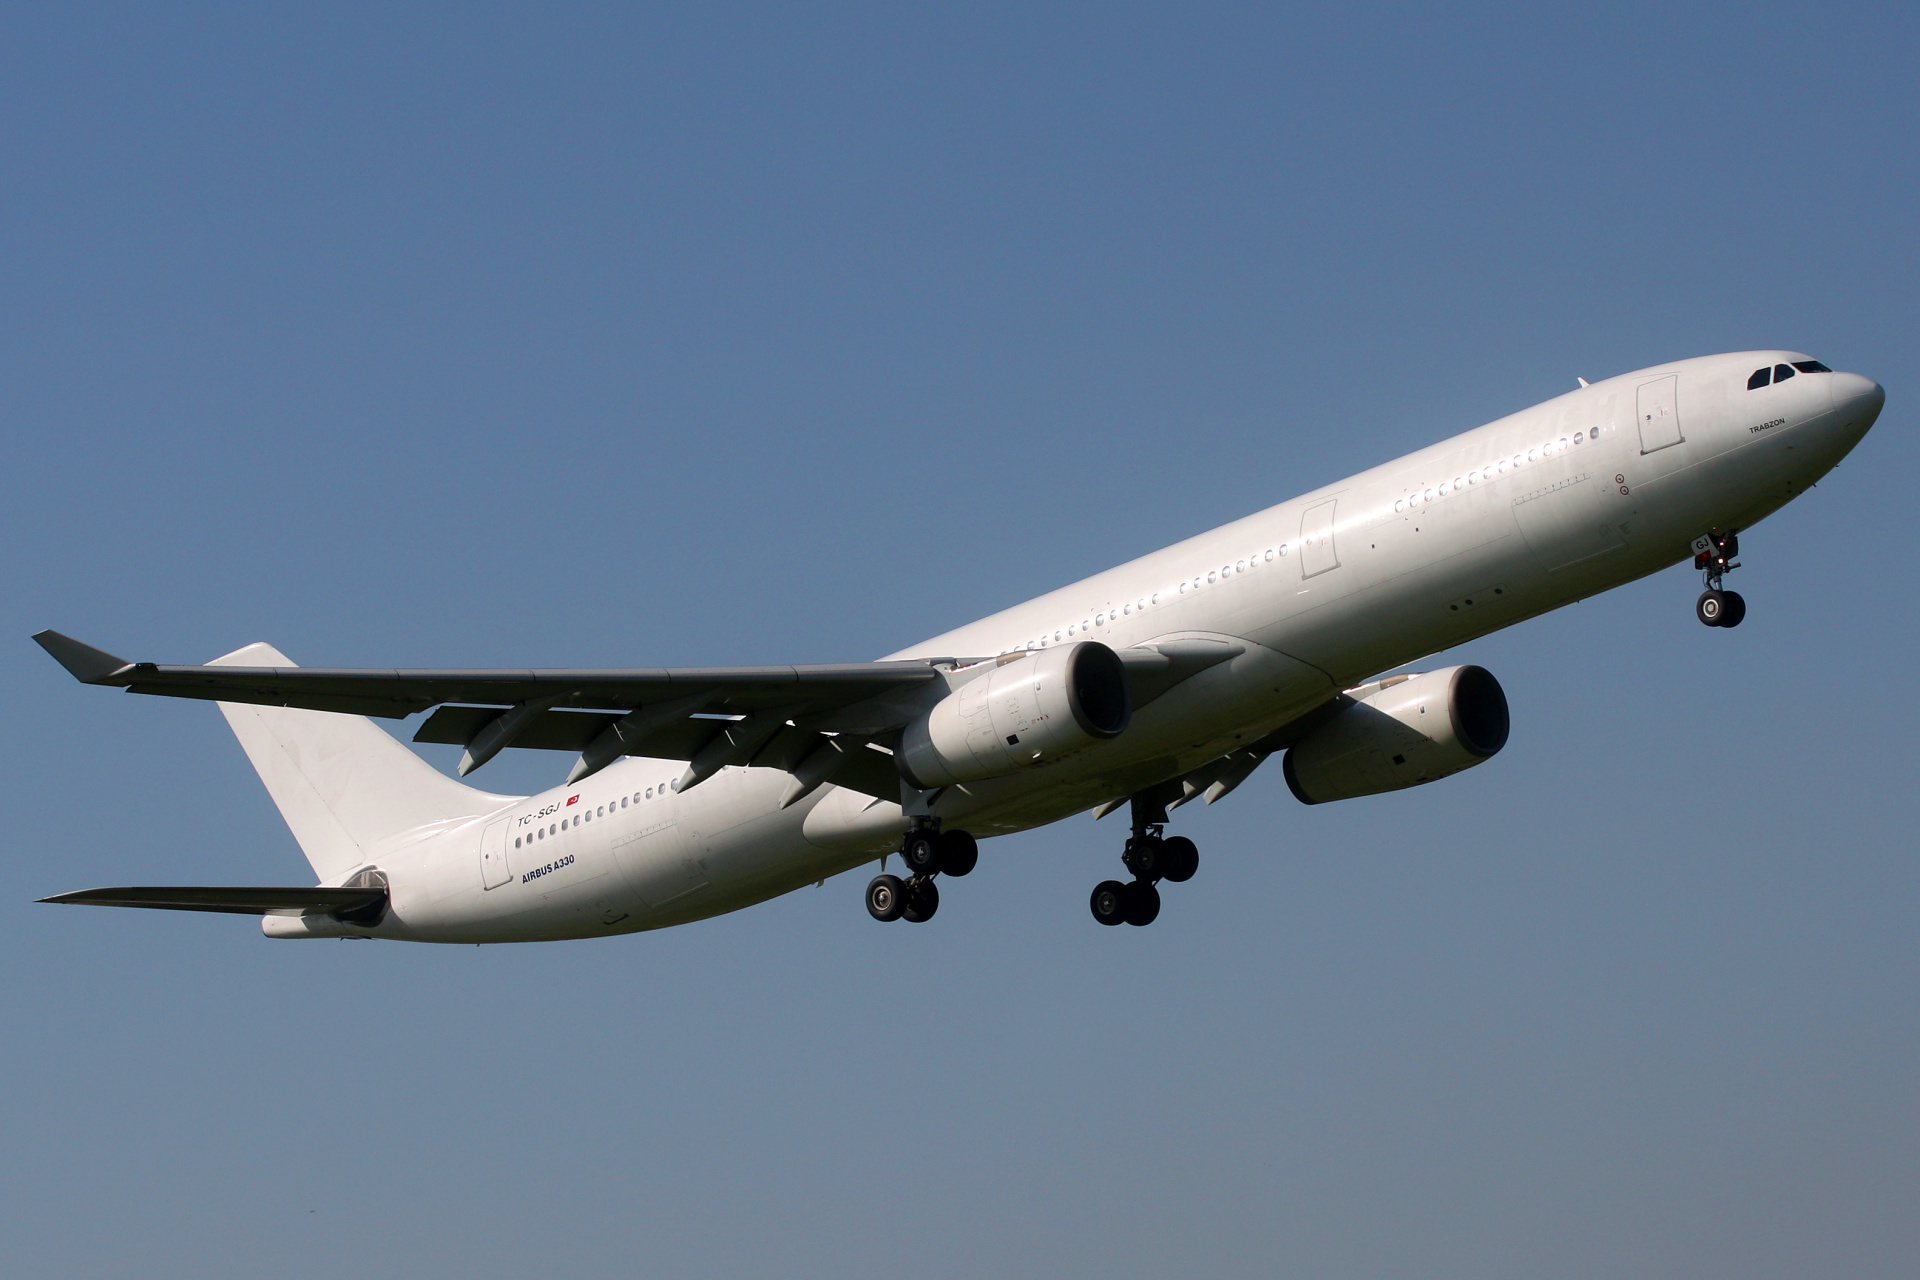 TC-SGJ, Saga Airlines (Aircraft » EPWA Spotting » Airbus A330-300)